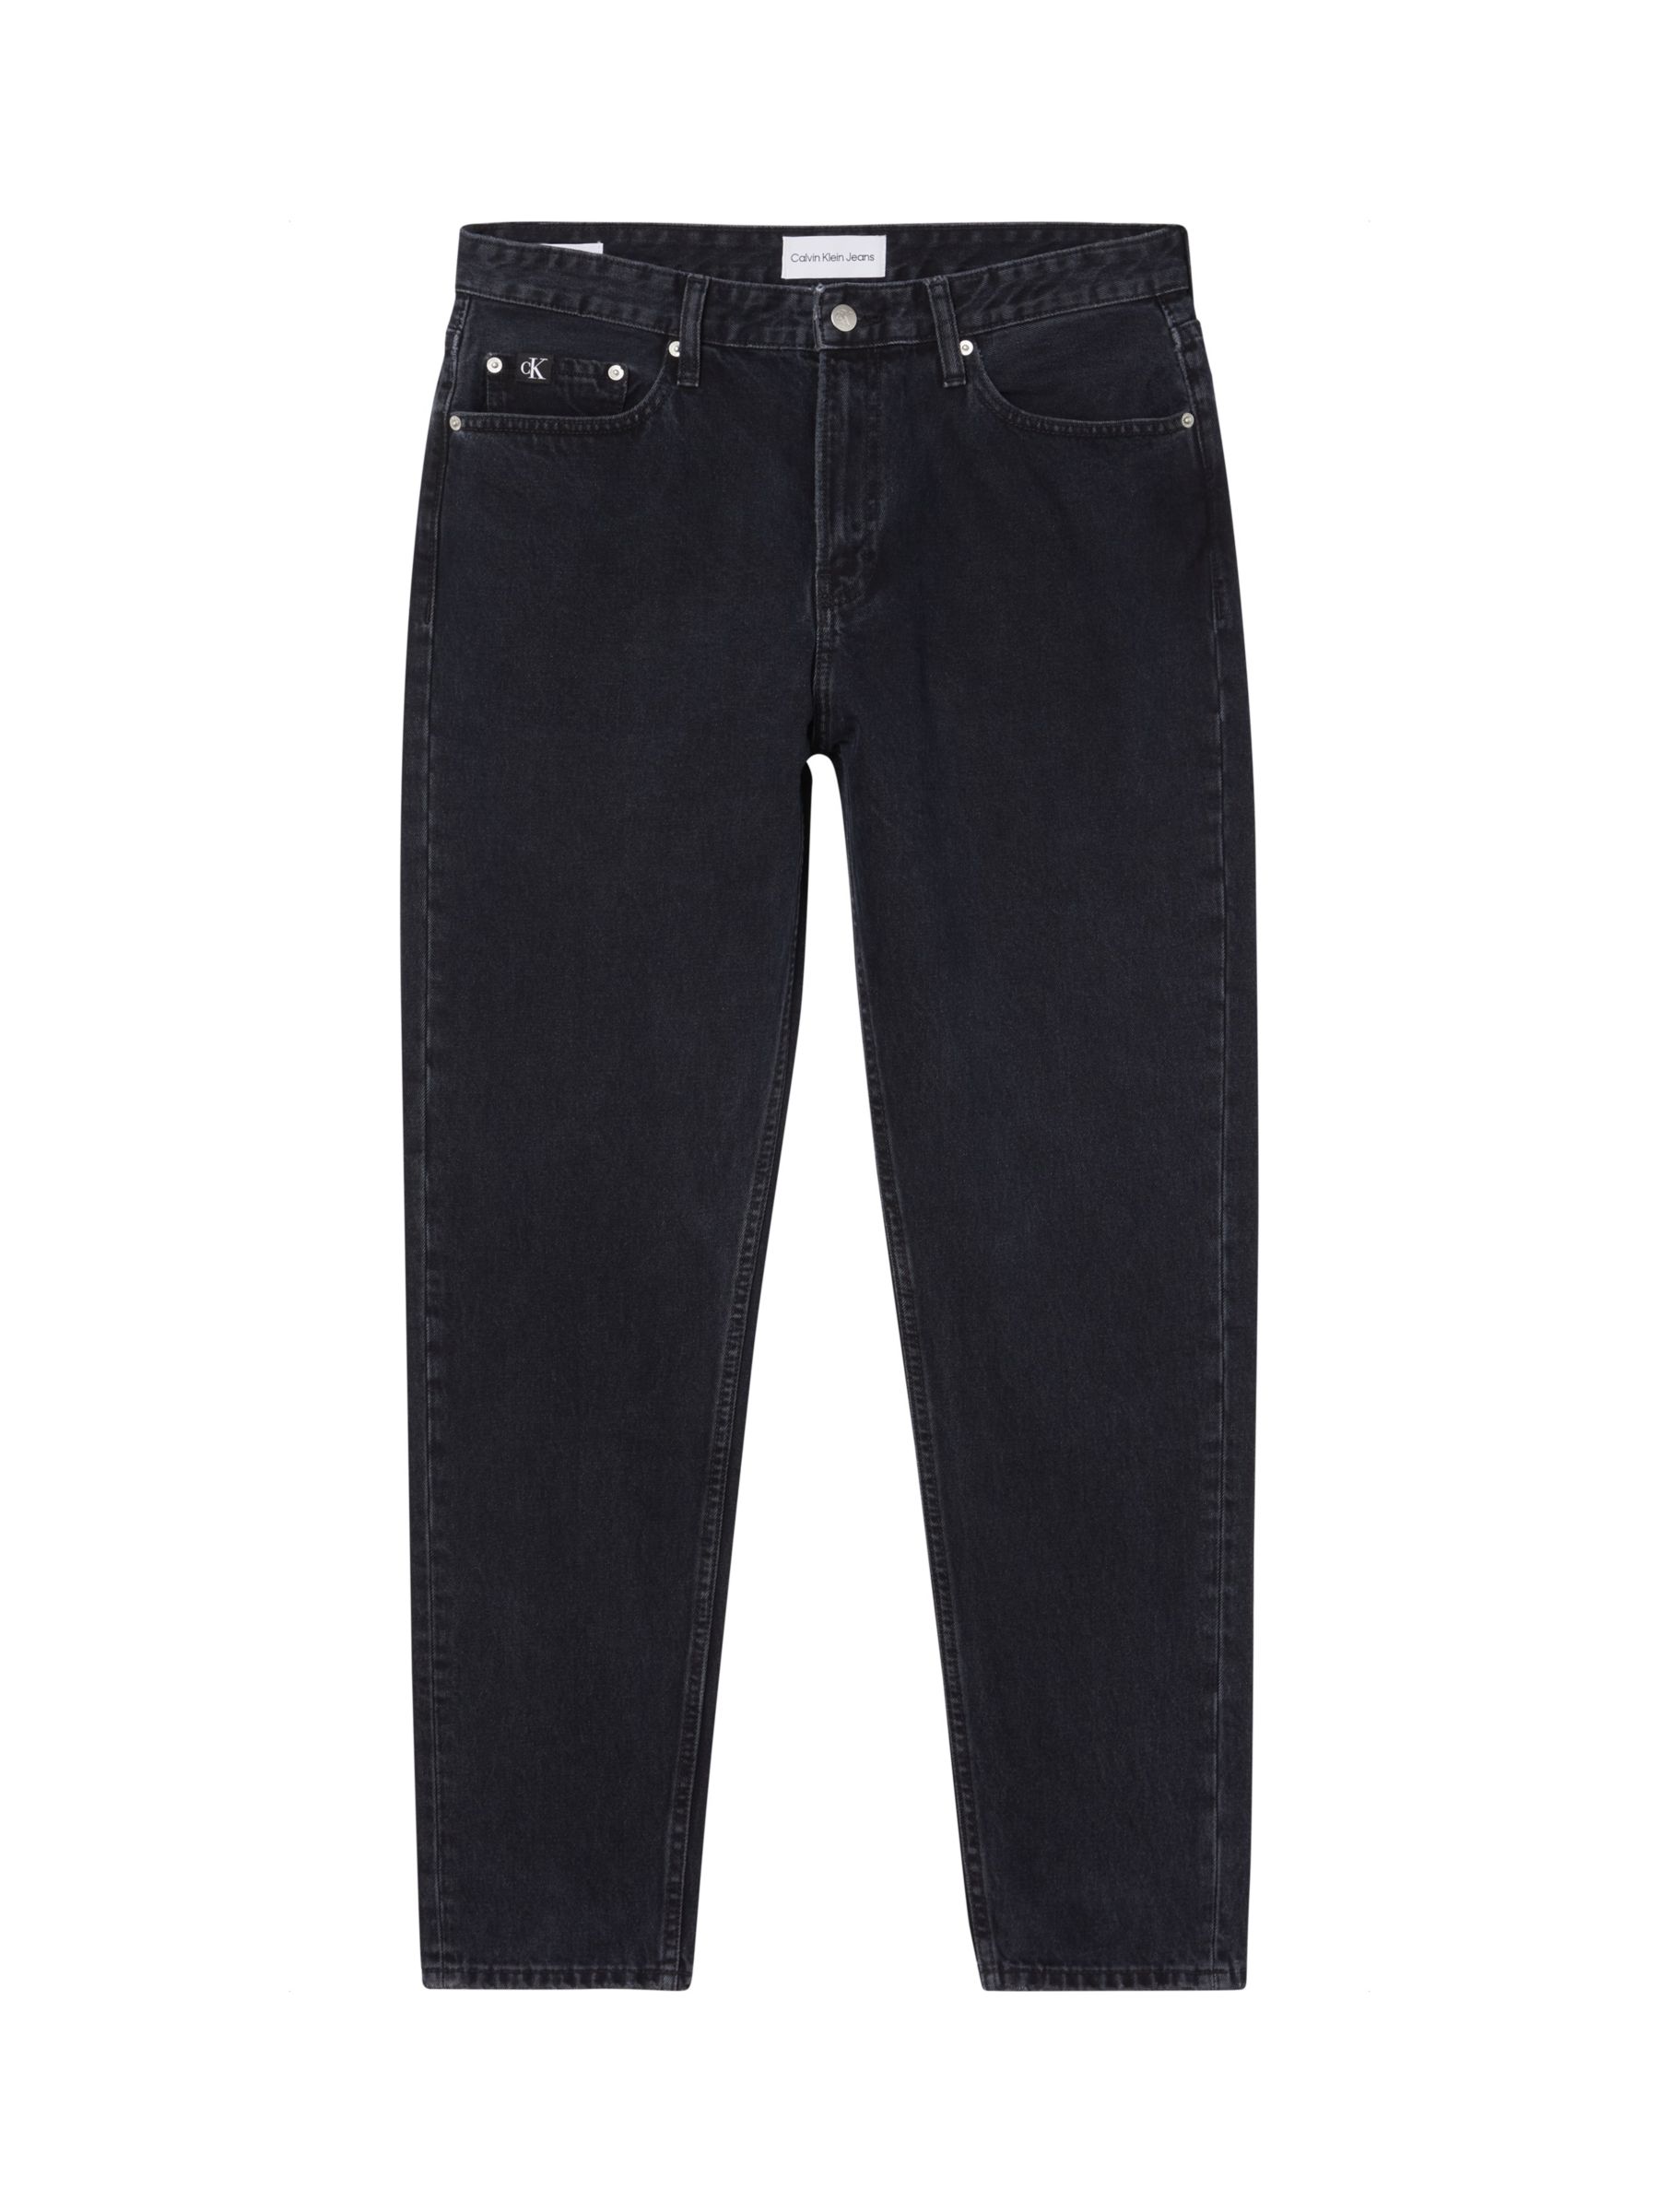 Calvin Klein Jeans Slim Tapered Jeans, Denim Grey at John Lewis & Partners